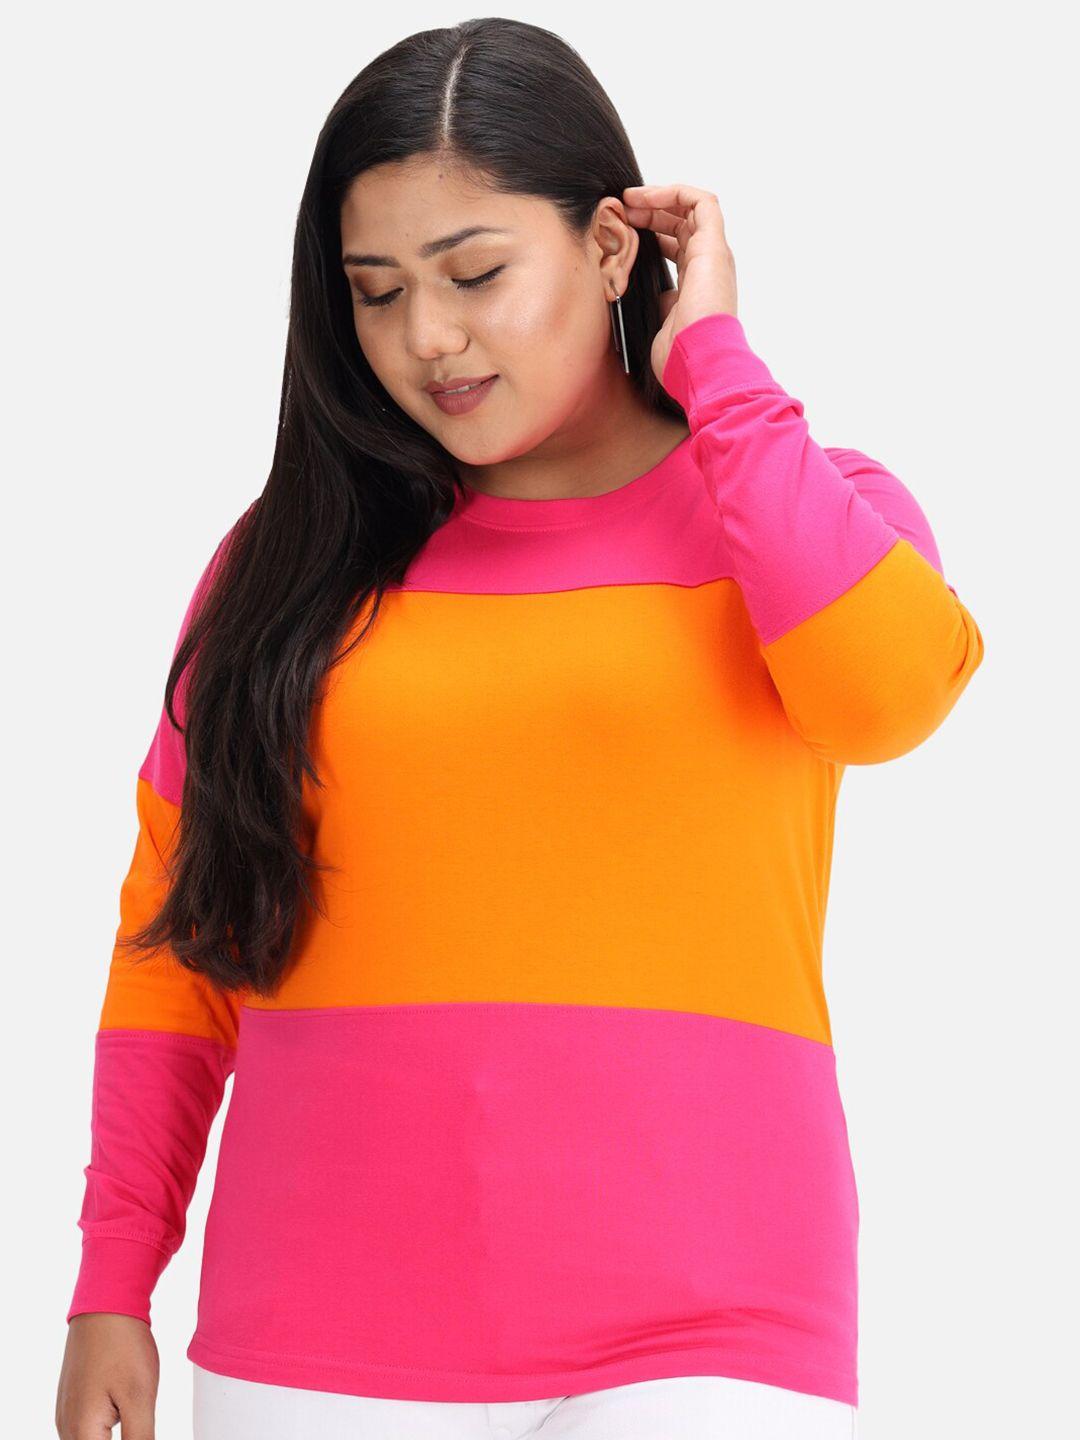 beyound size - the dry state women fuchsia pink & orange colourblocked cotton t-shirt